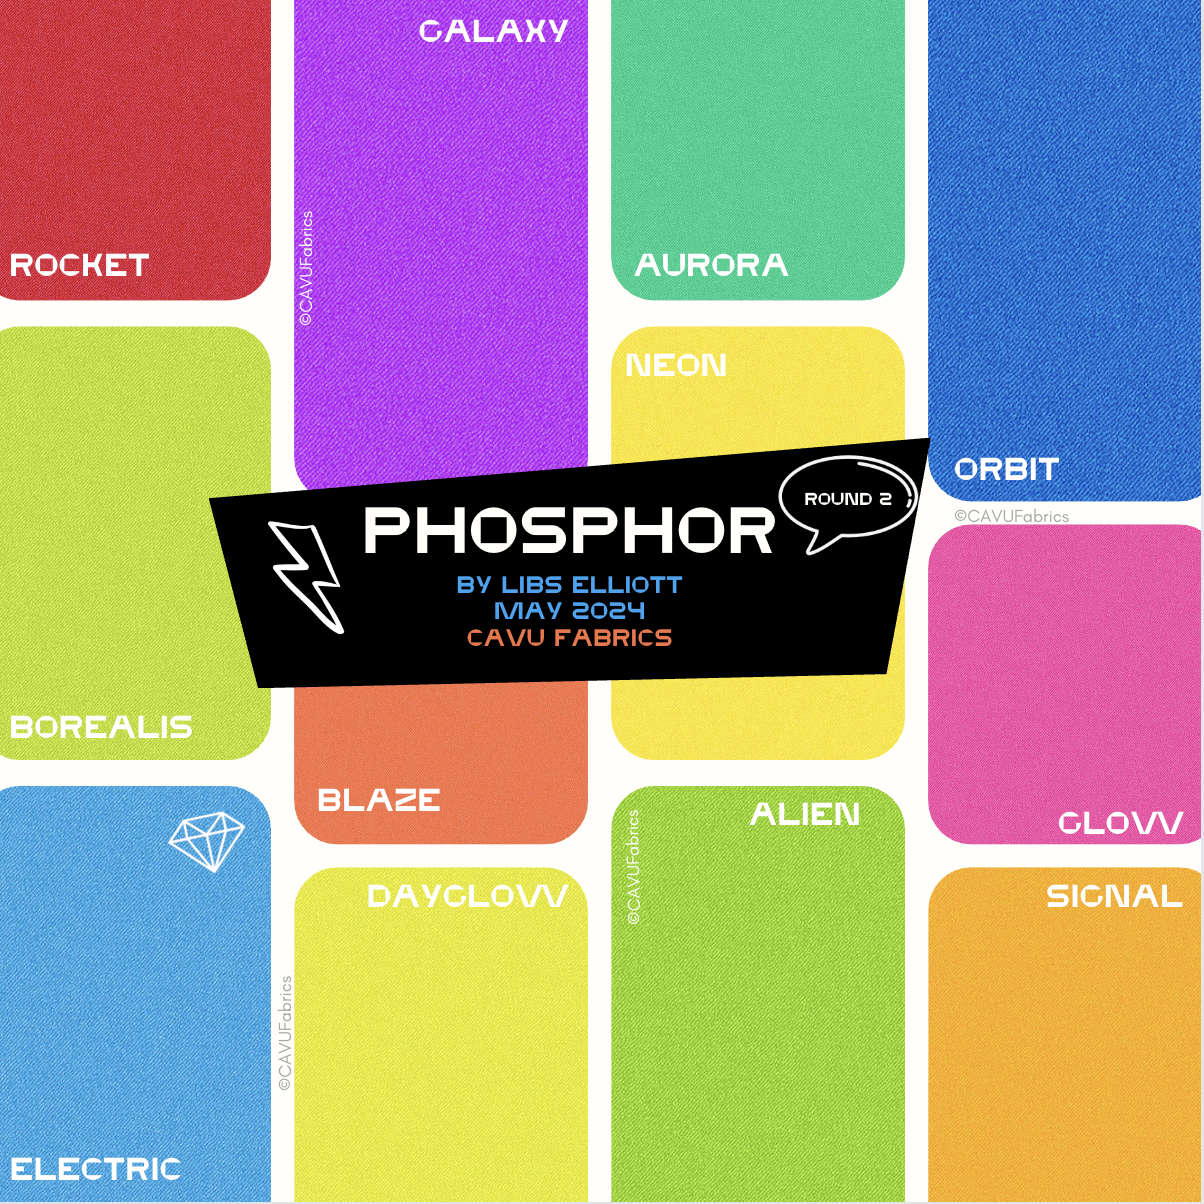 Galaxy - Phosphor by Libs Elliott